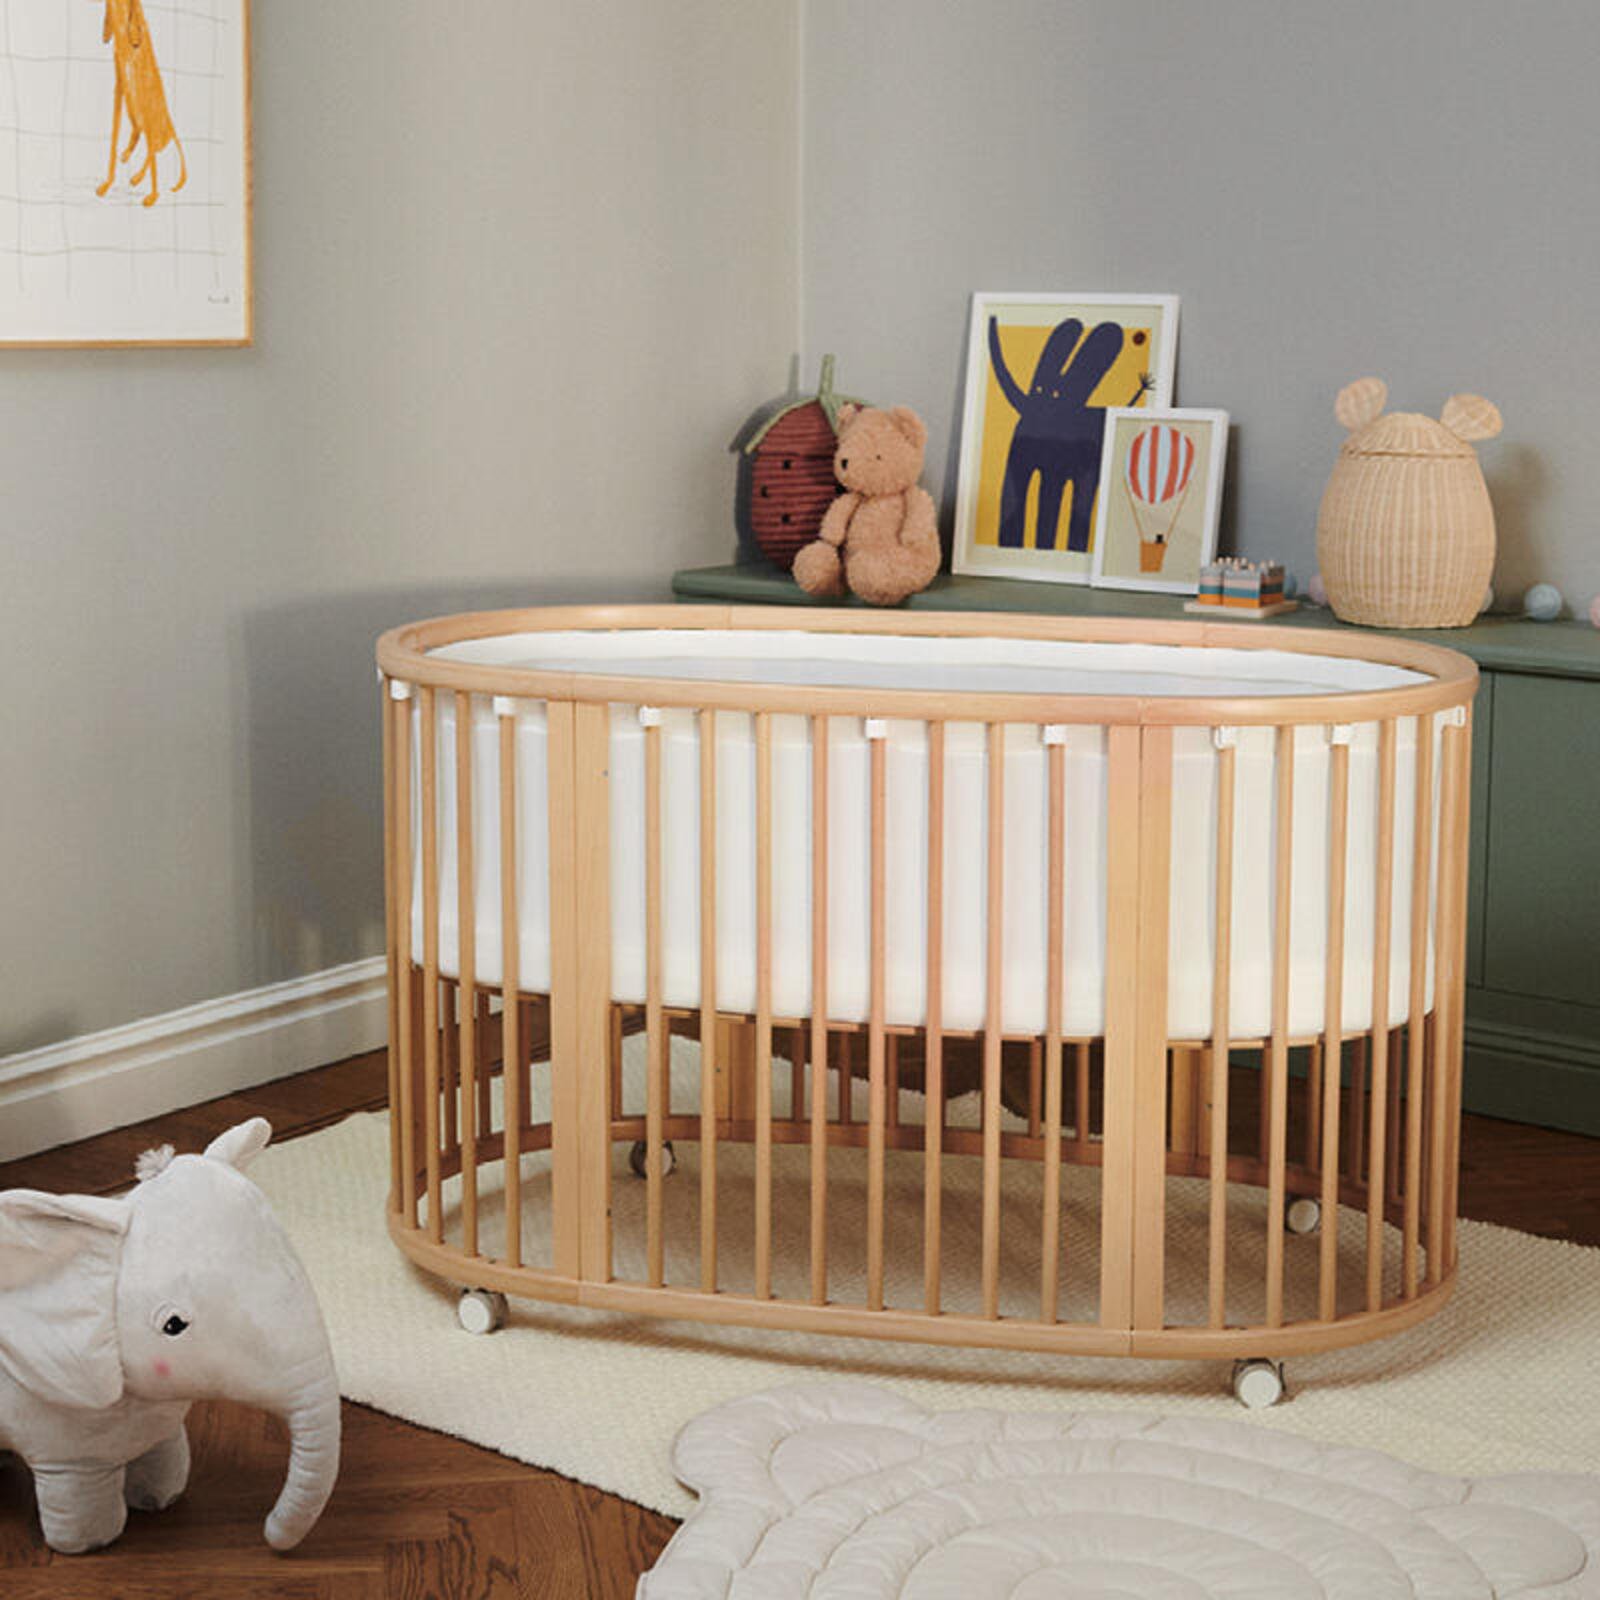 Sleepi crib bed with liner in nursery. An essential piece of nursery furniture.